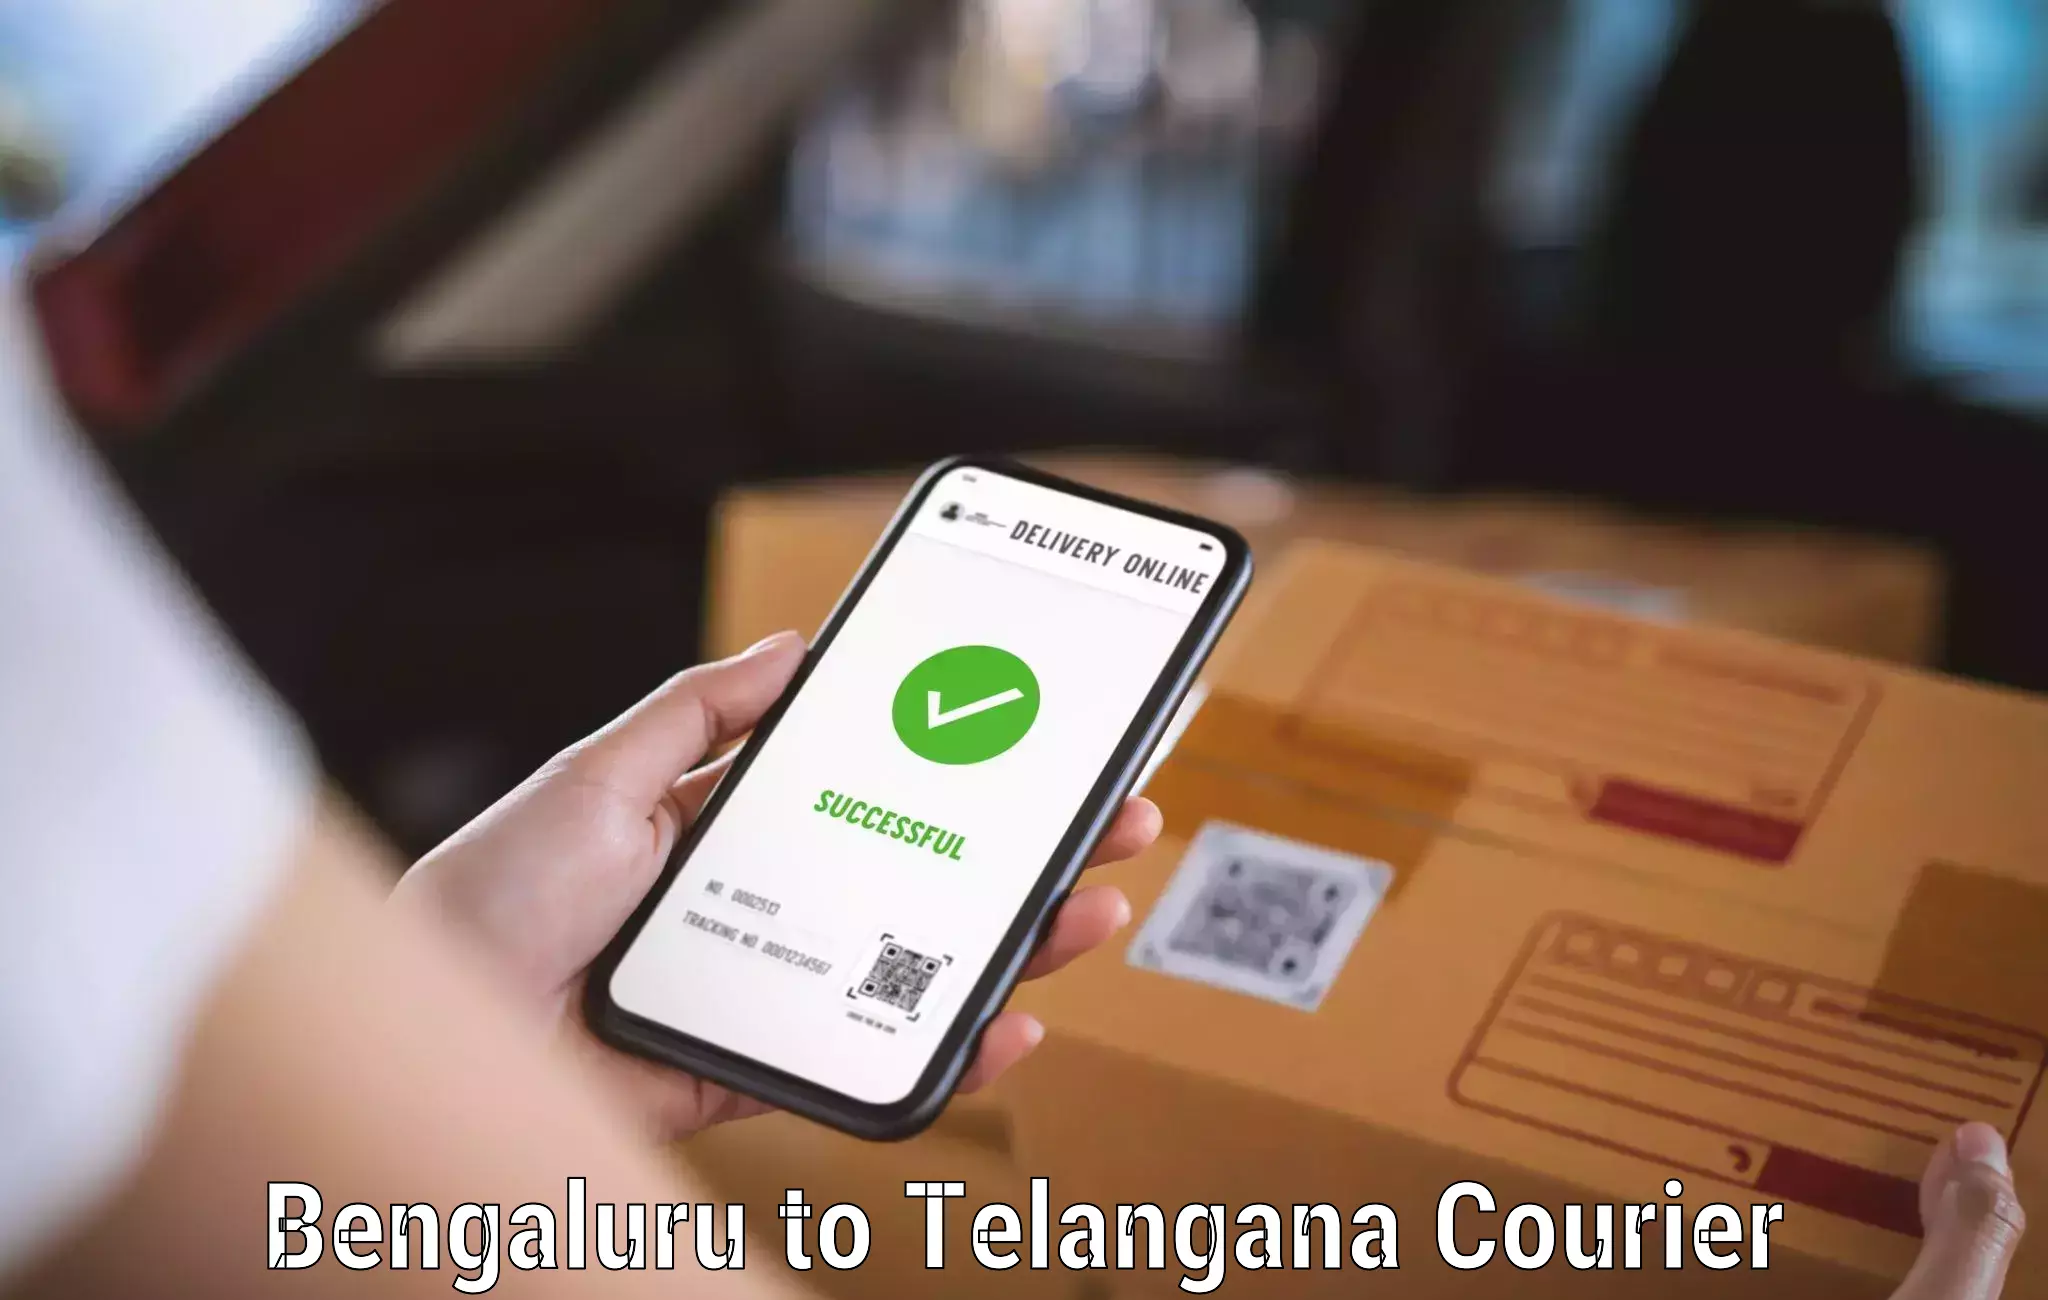 Fast delivery service Bengaluru to Miryalaguda